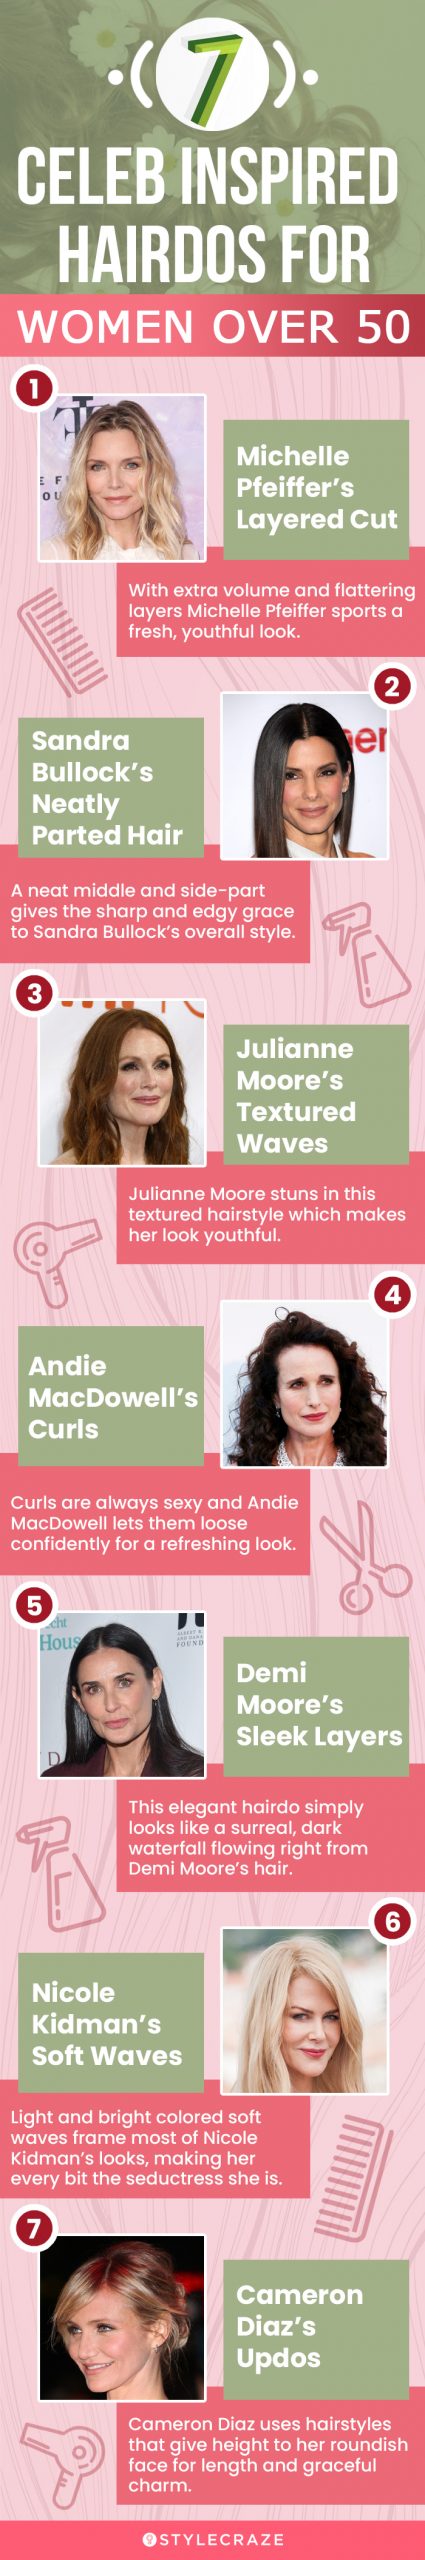 7 celeb inspired hairdos for women over 50 [infographic]